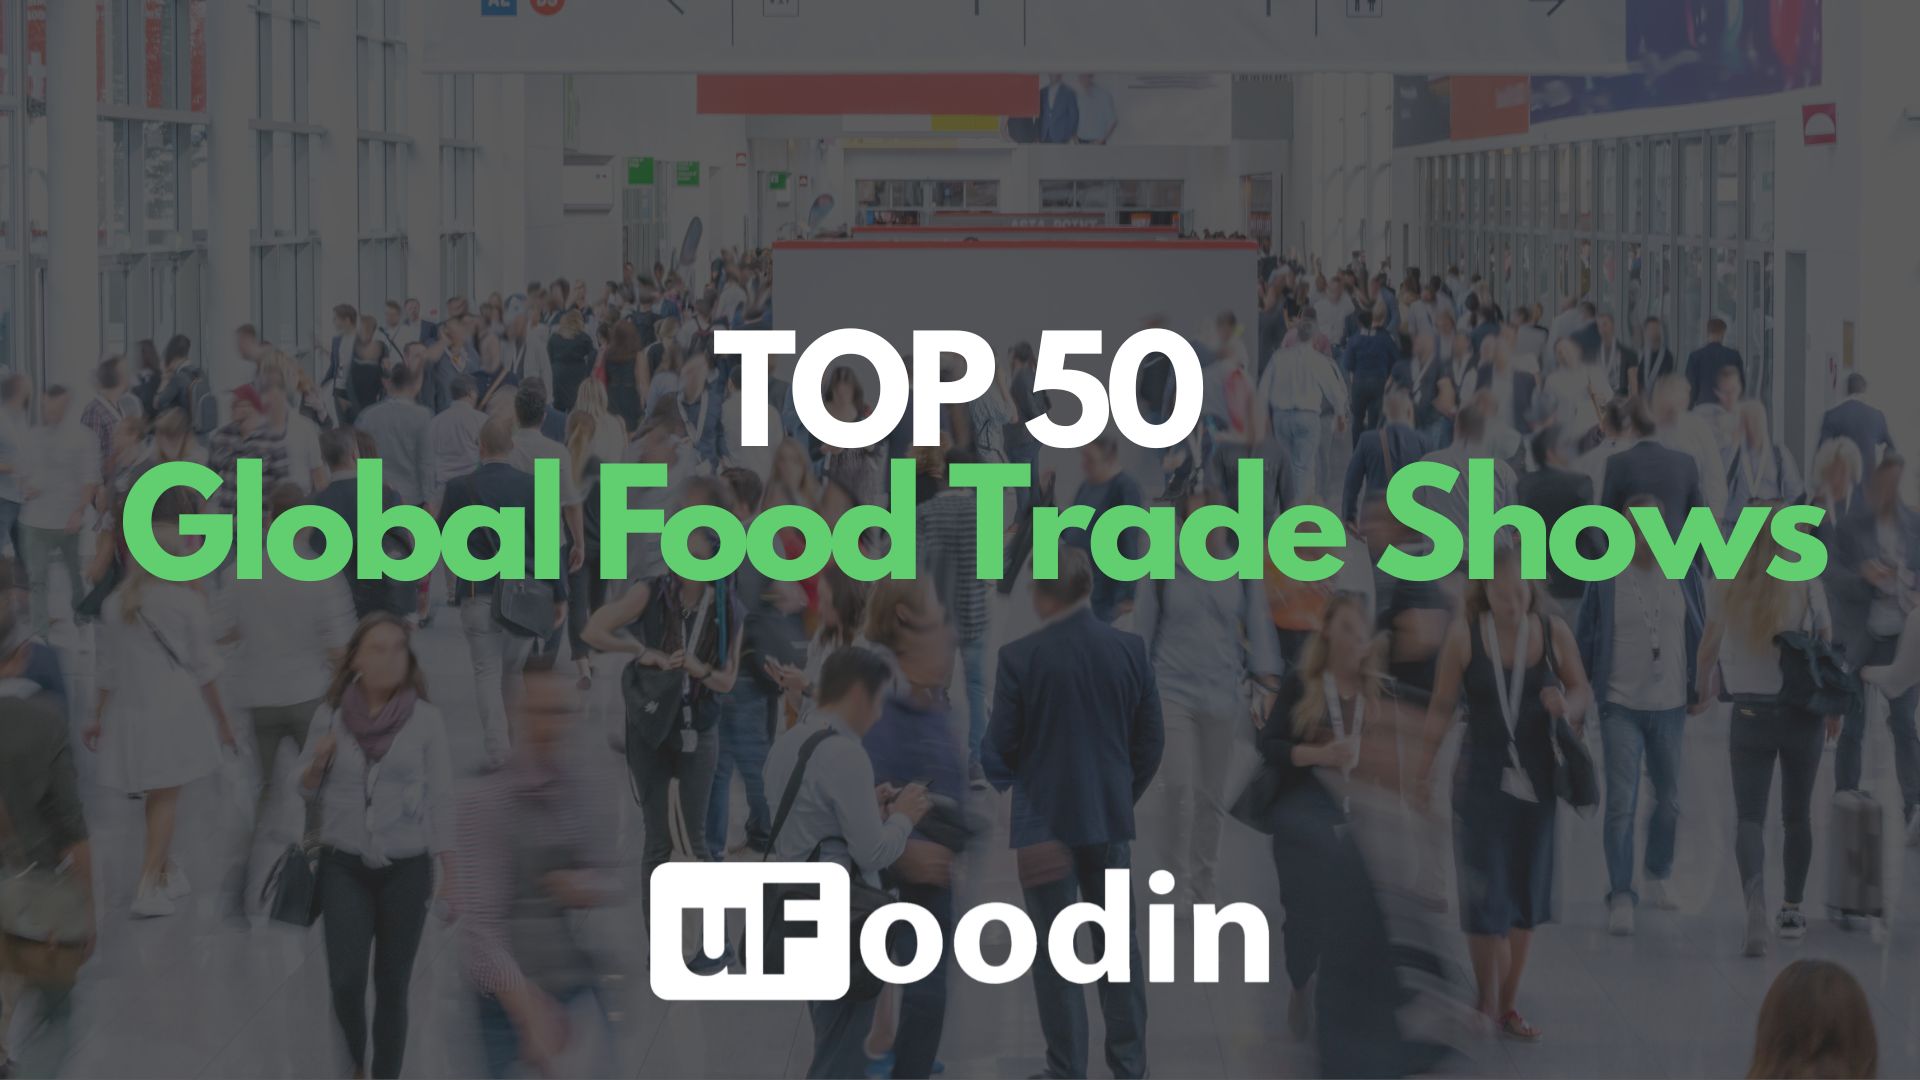 TOP 50 GLOBAL FOOD TRADE SHOW UFOODIN